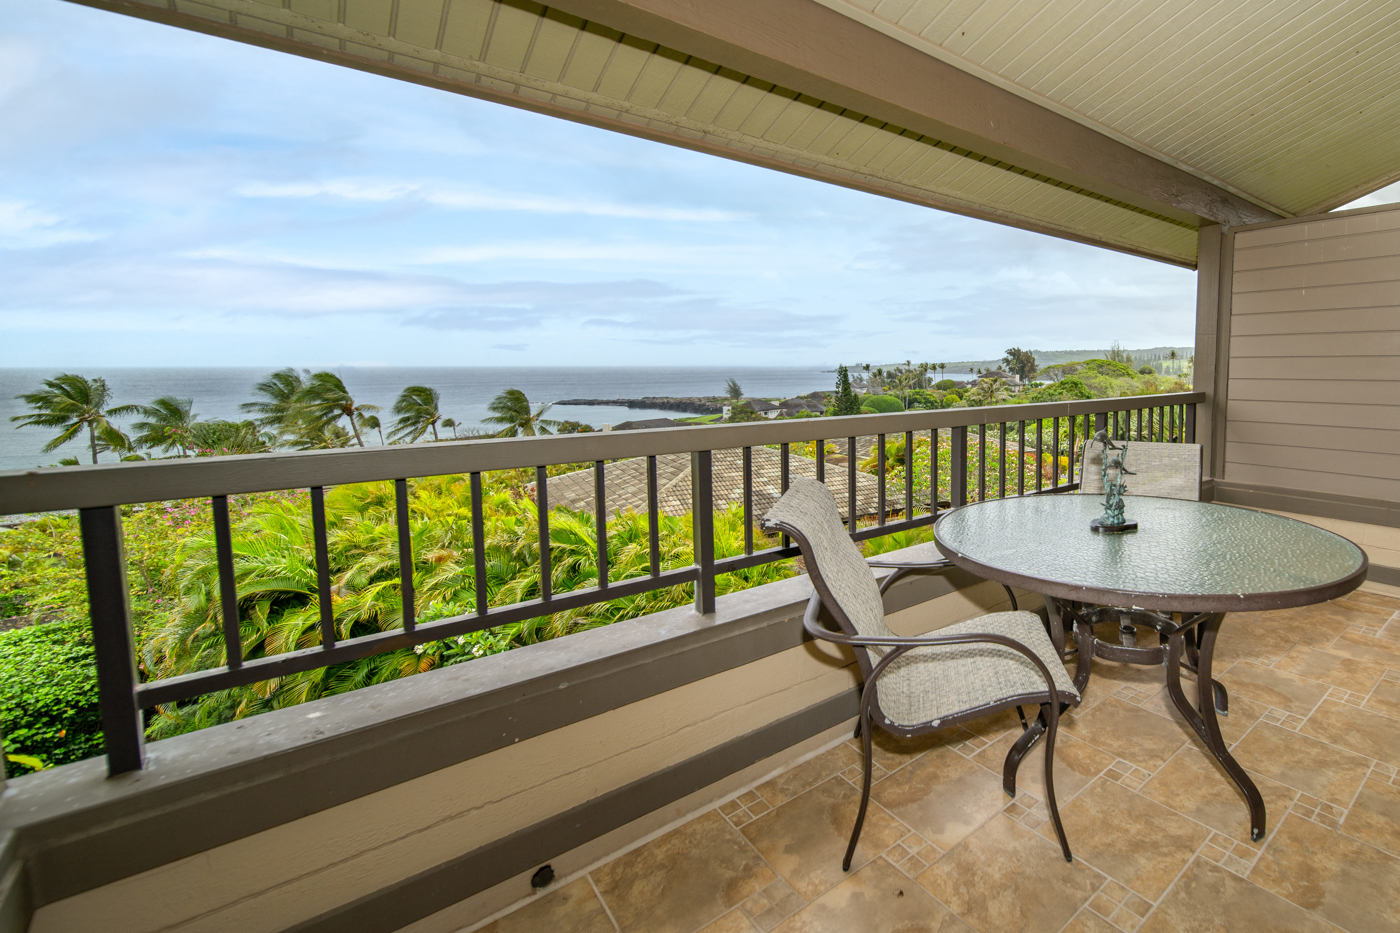 The Kapalua Villas Maui accommodations